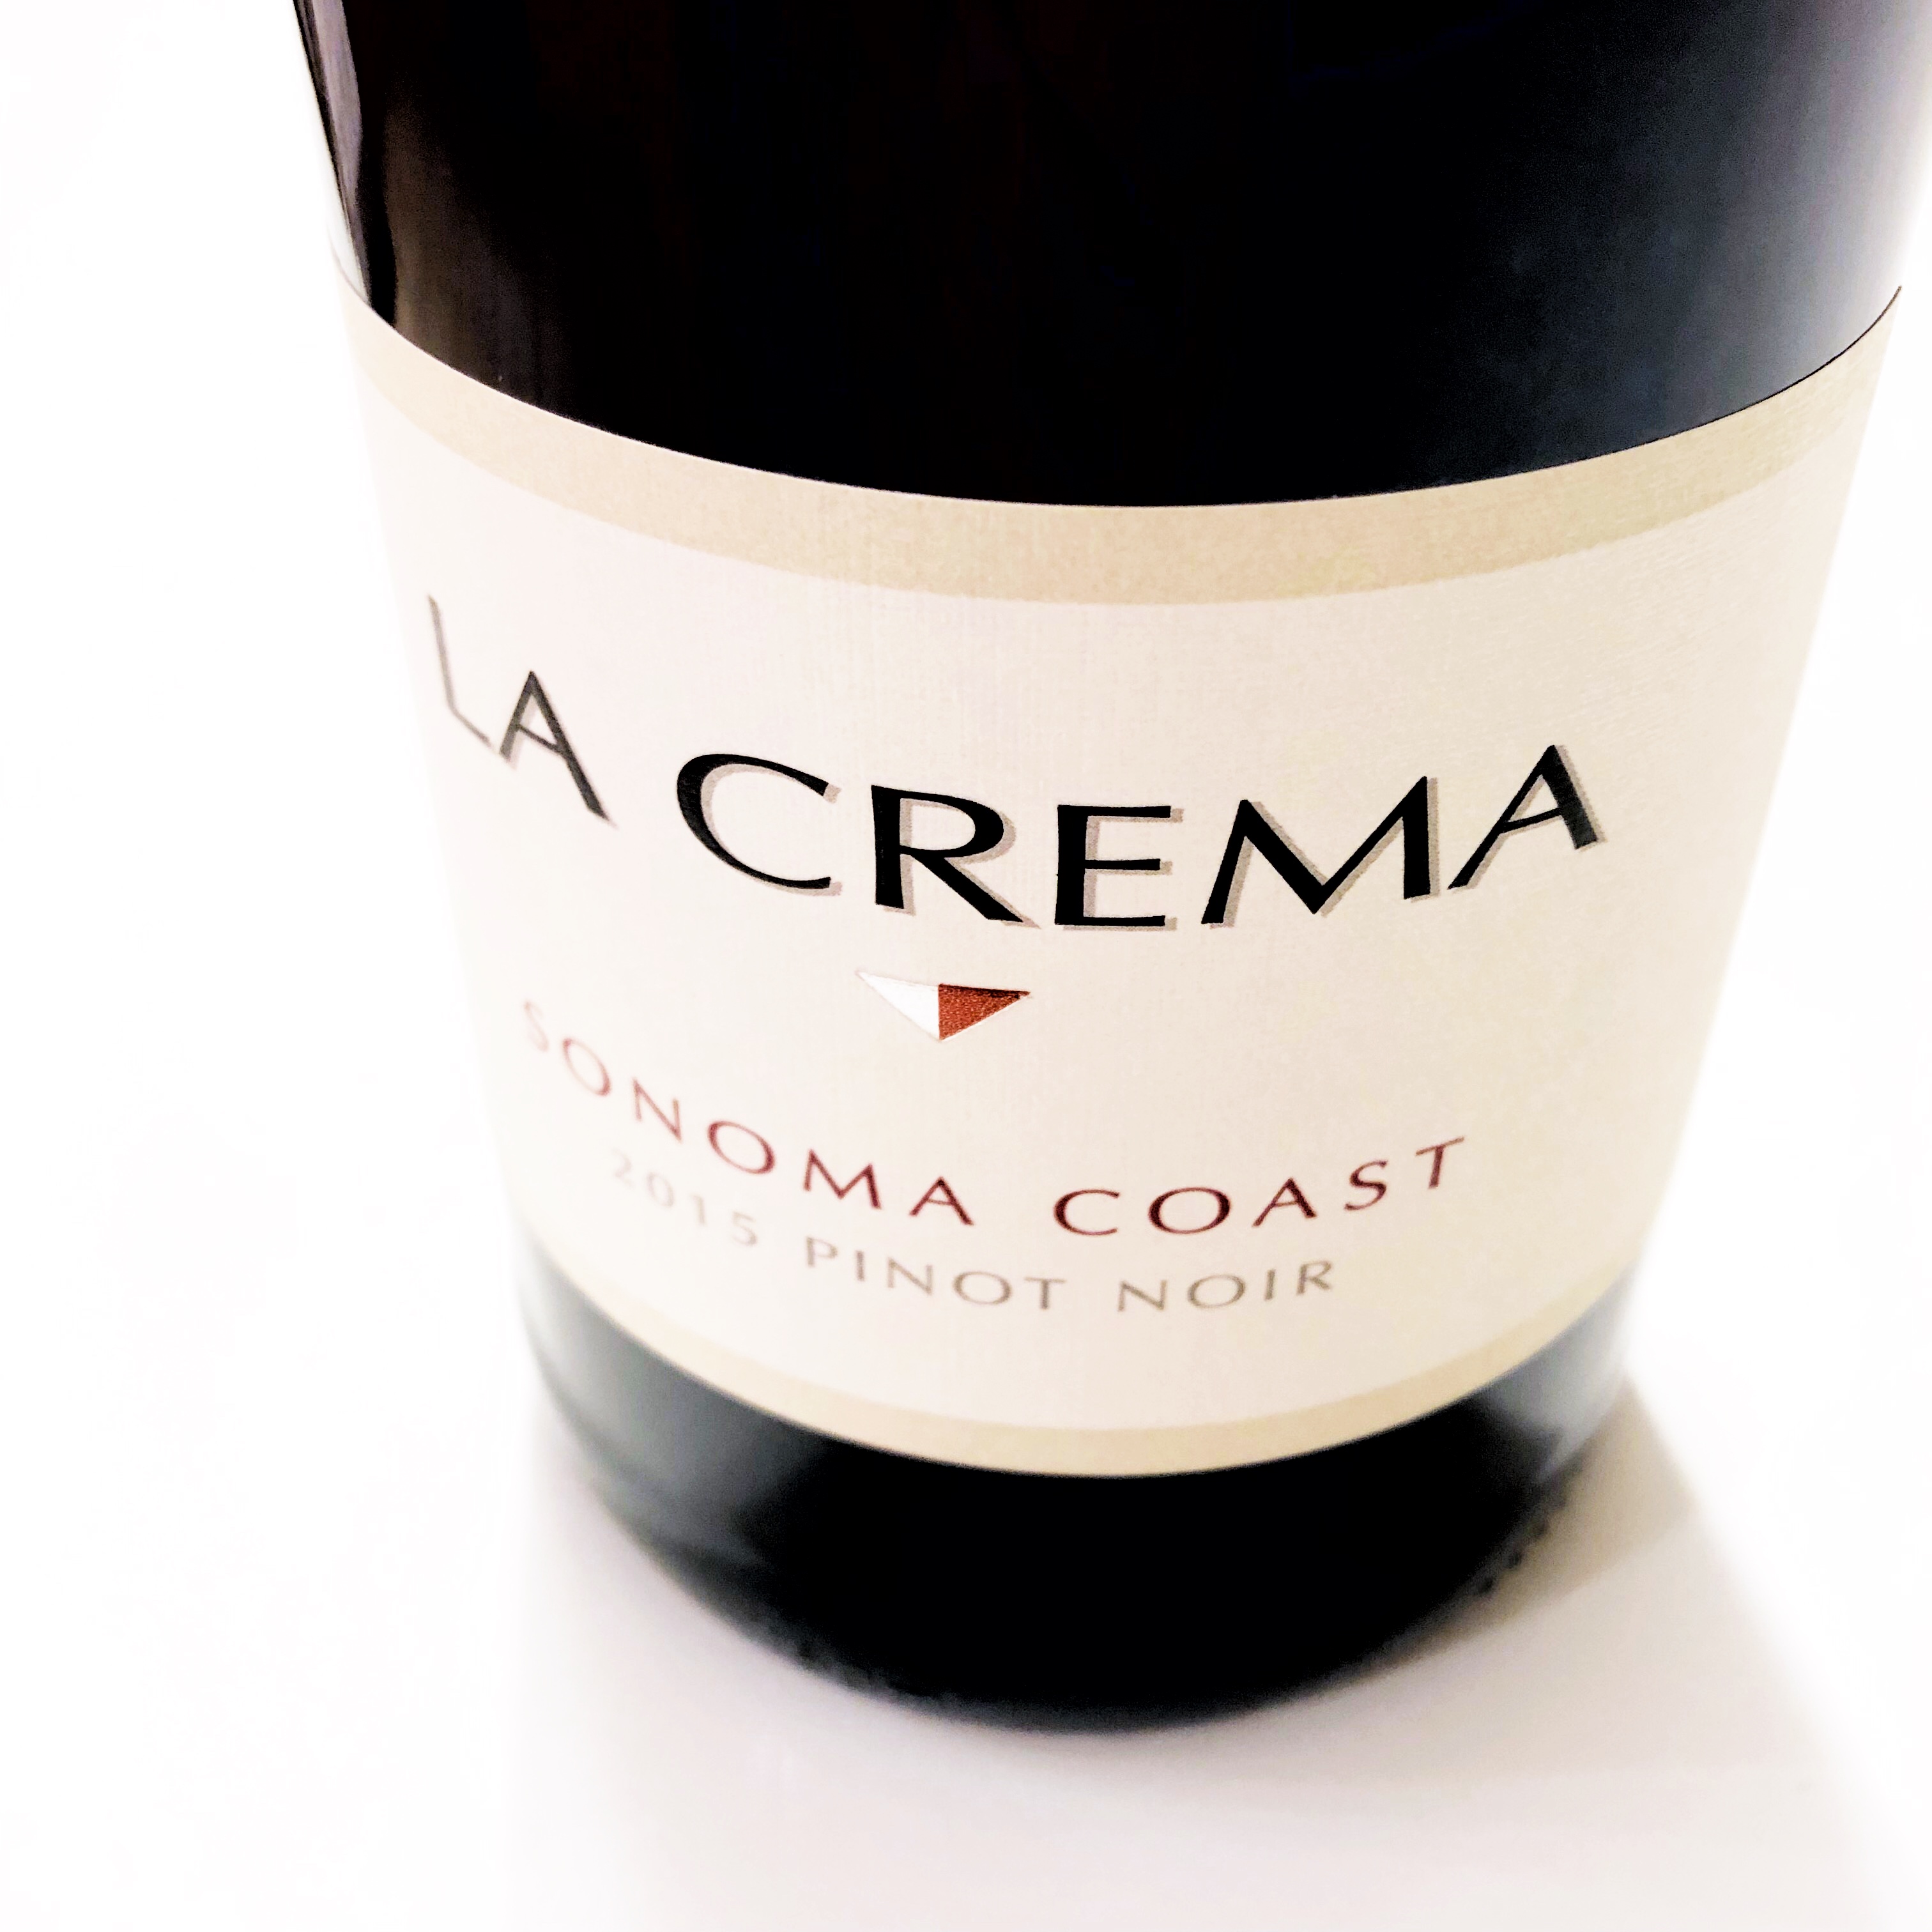 La Crema Pinot Noir - Valentine's Day wine